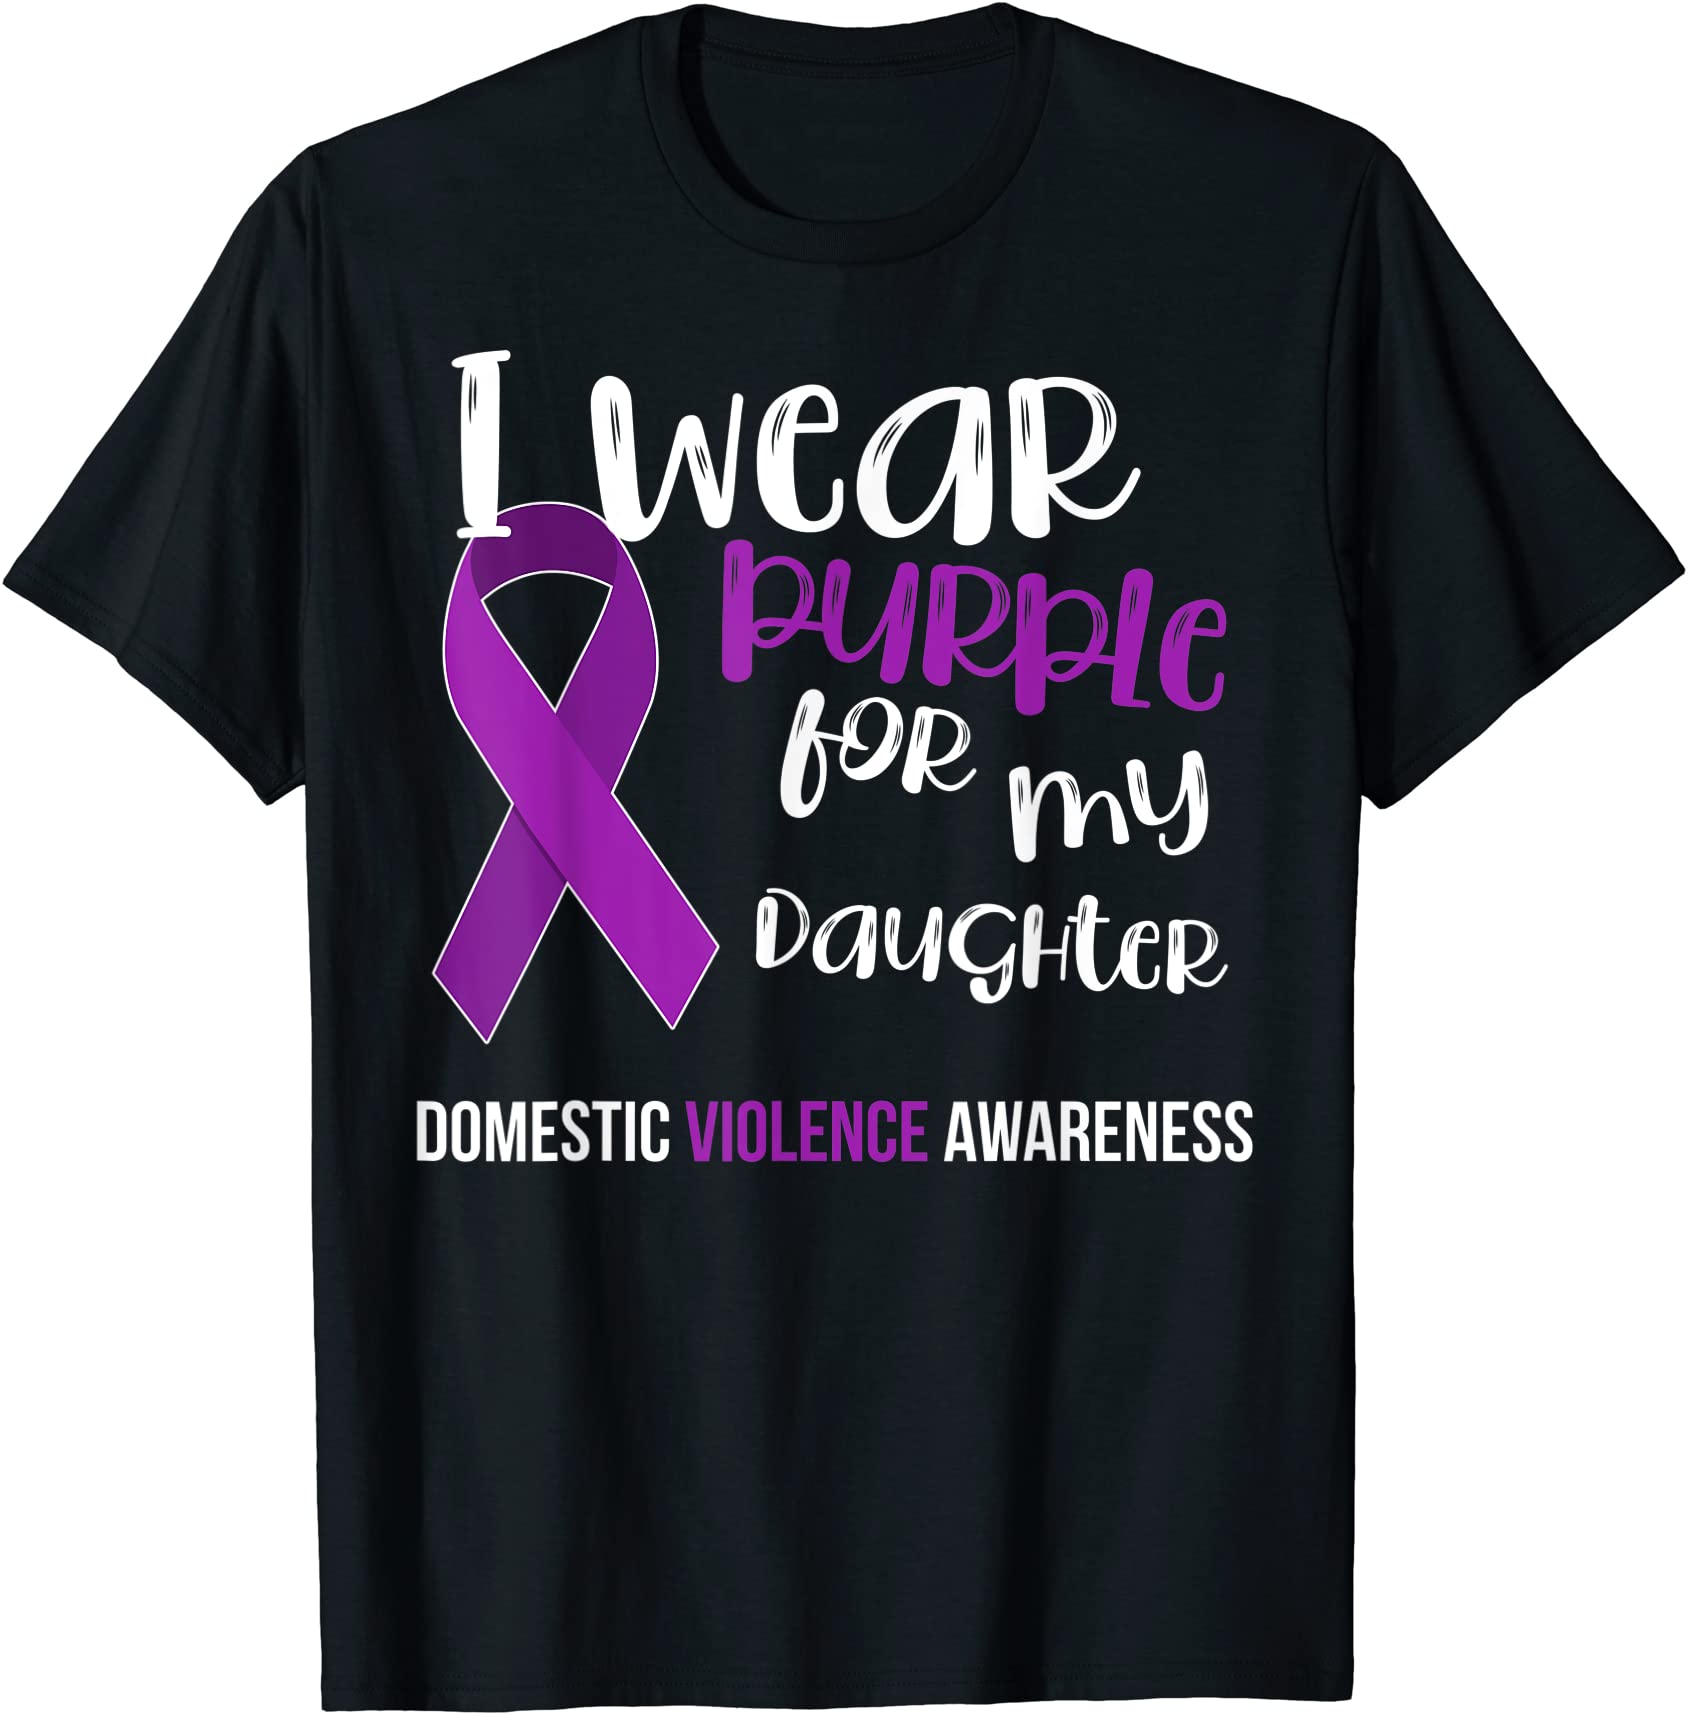 domestic violence awareness survivor gift design t shirt men - Buy t ...